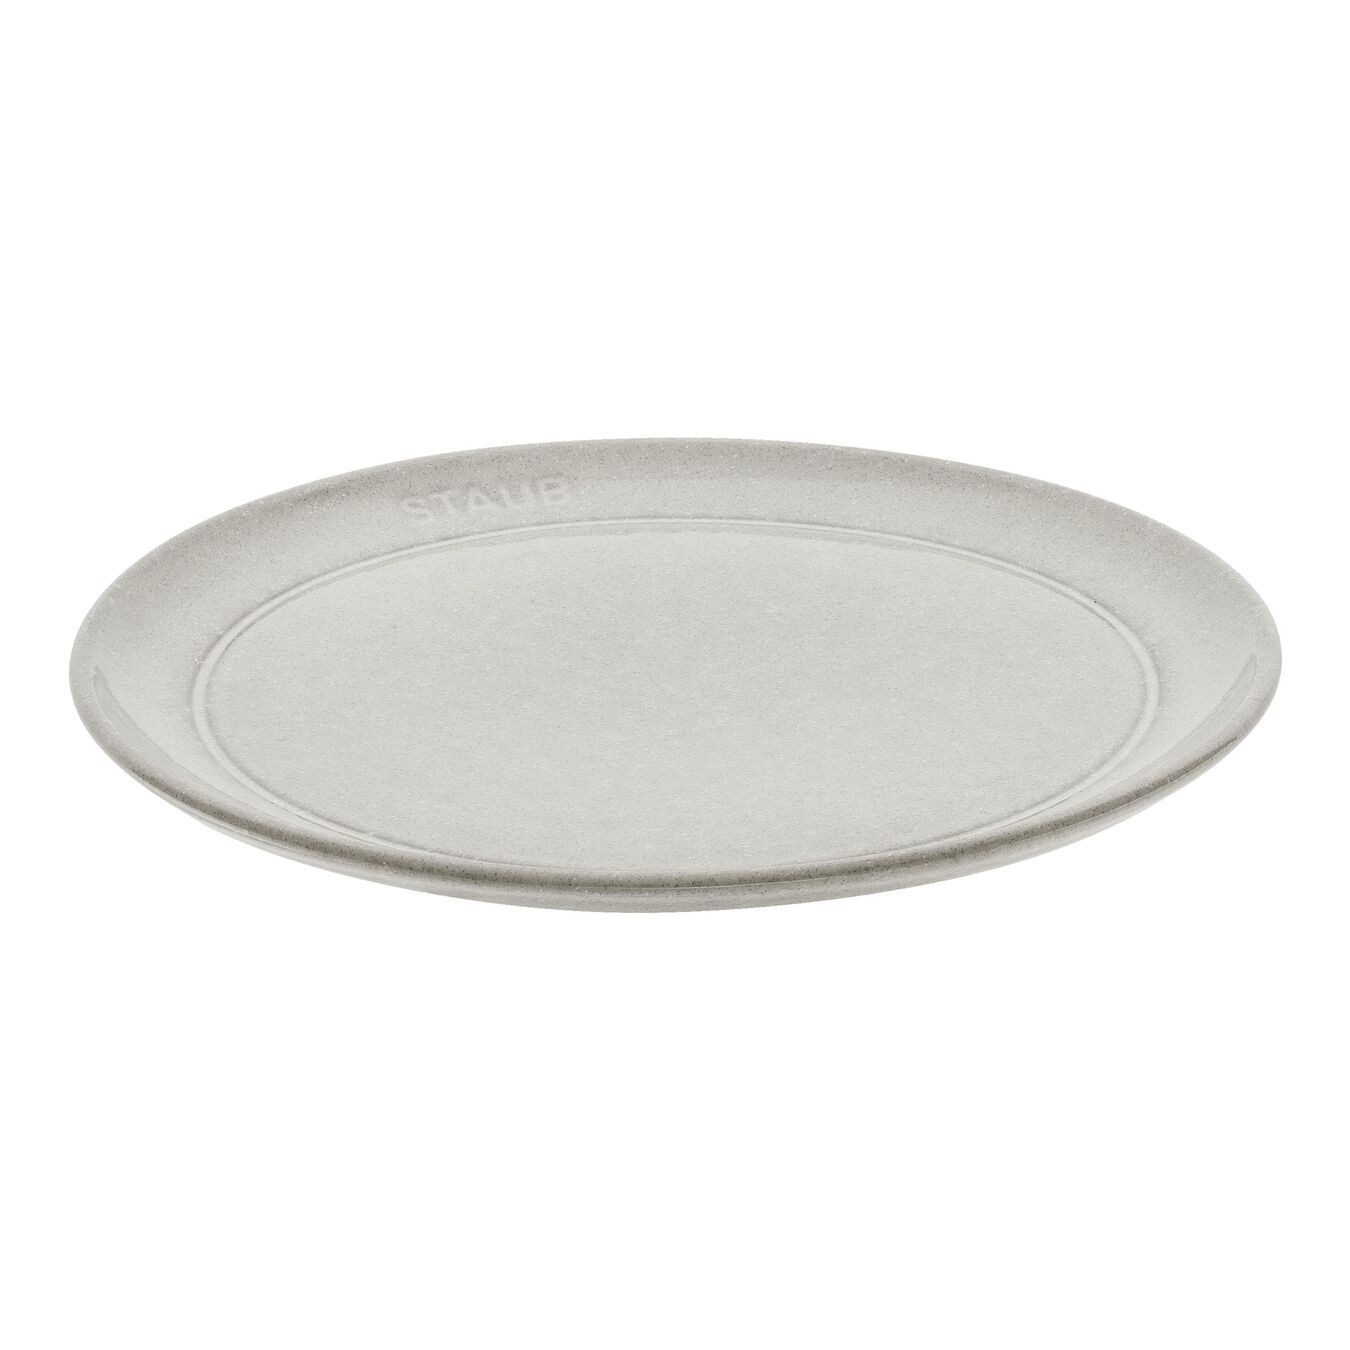 20 cm ceramic round Plate flat, white truffle,,large 1